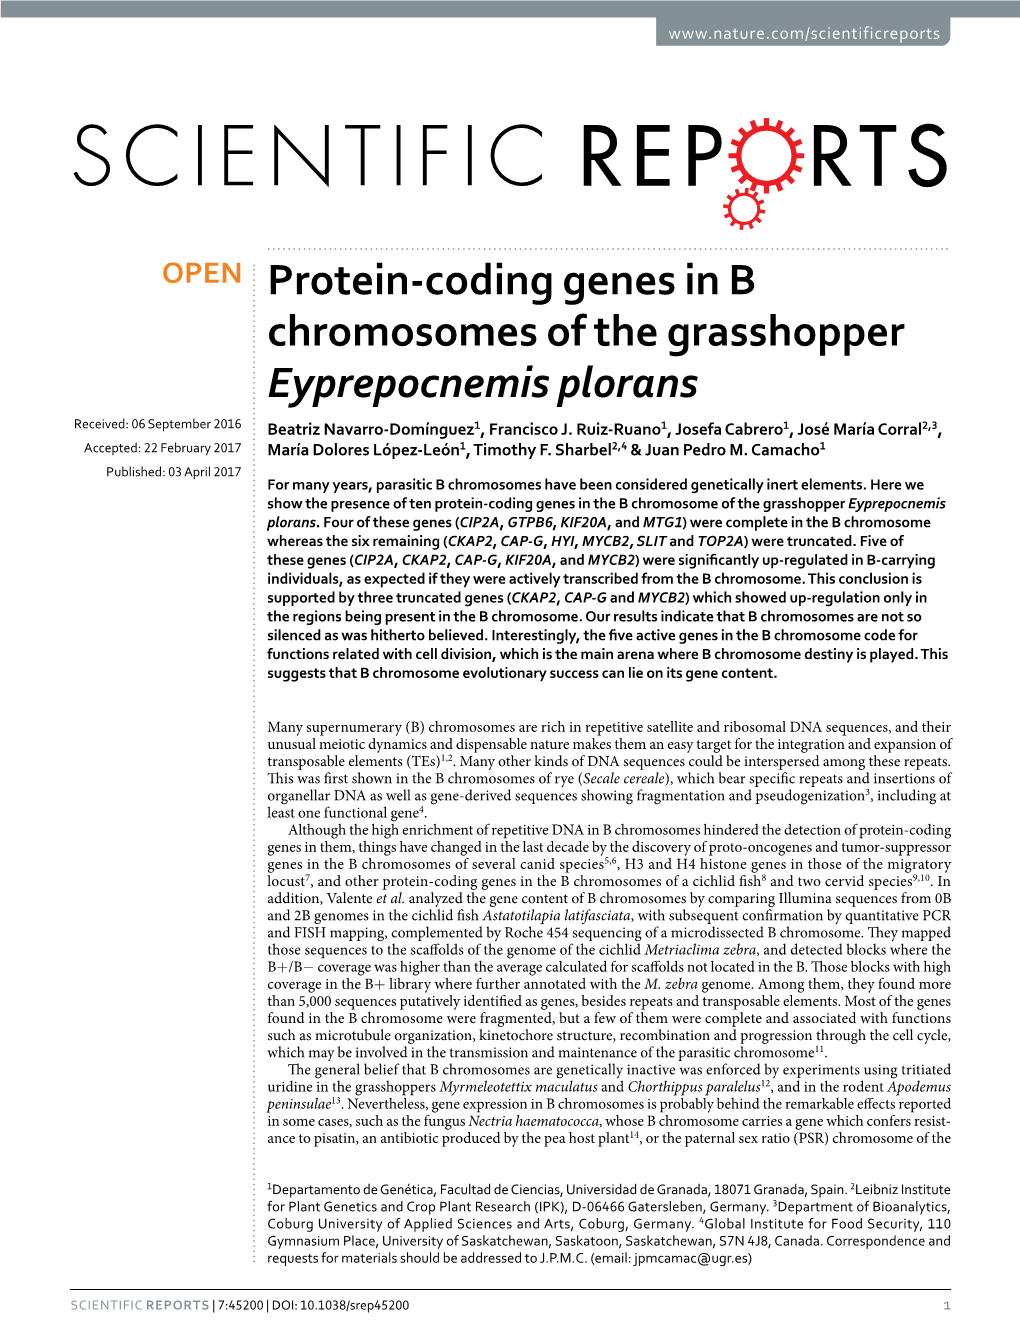 Protein-Coding Genes in B Chromosomes of the Grasshopper Eyprepocnemis Plorans Received: 06 September 2016 Beatriz Navarro-Domínguez1, Francisco J